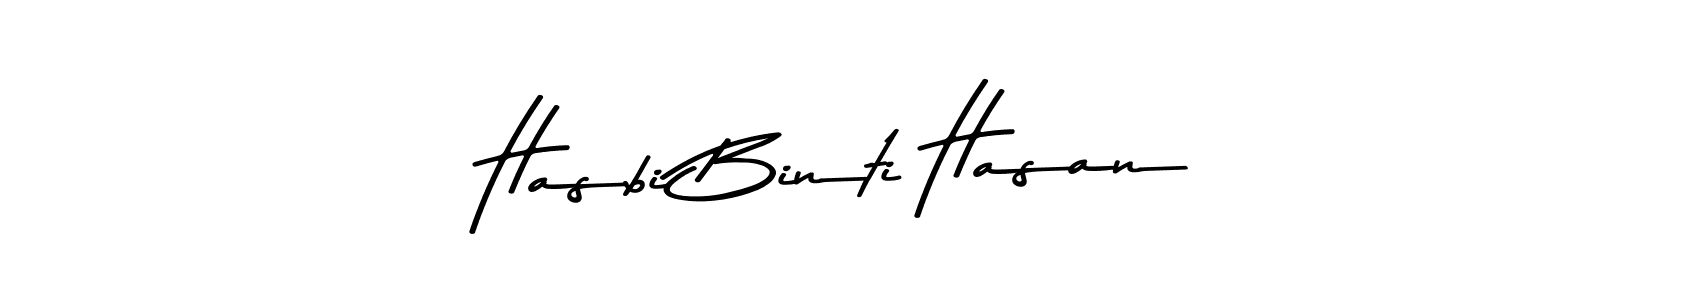 Make a beautiful signature design for name Hasbi Binti Hasan. Use this online signature maker to create a handwritten signature for free. Hasbi Binti Hasan signature style 9 images and pictures png